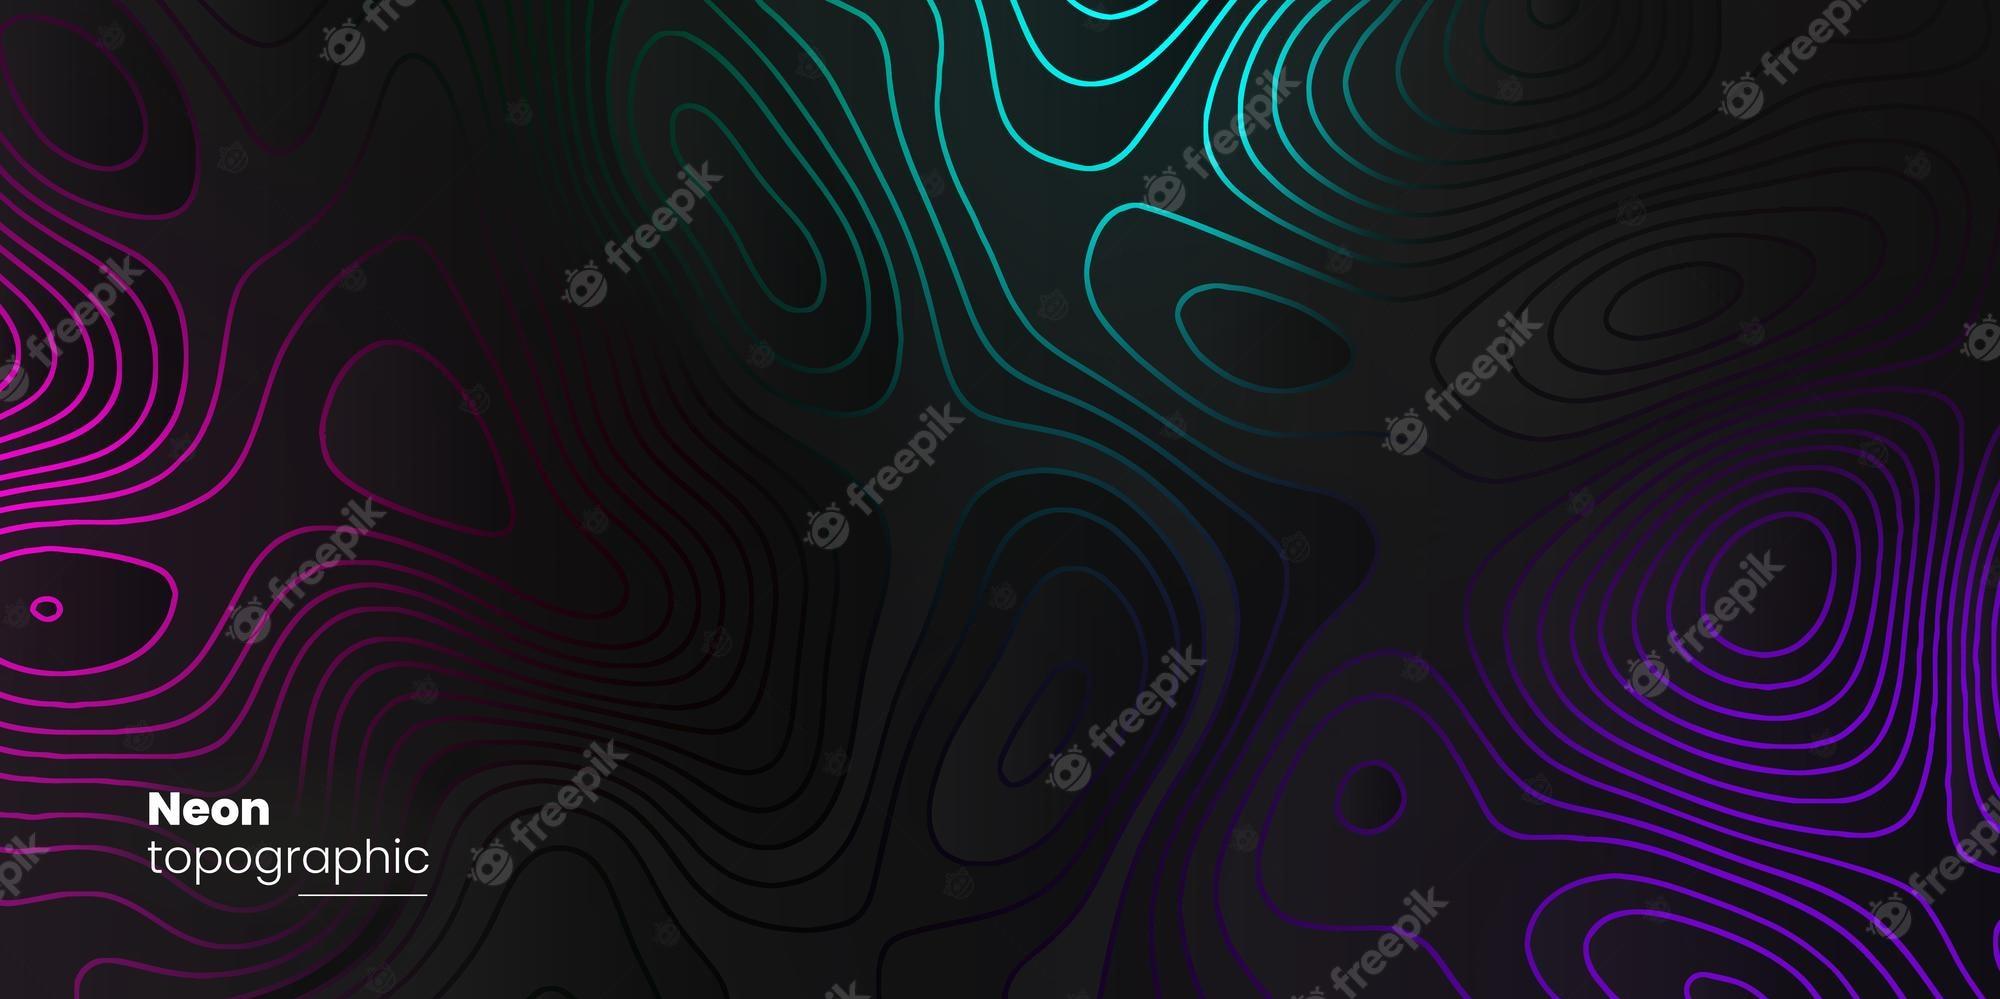 Premium Vector Black Topography Pattern On Glowing Pink Purple